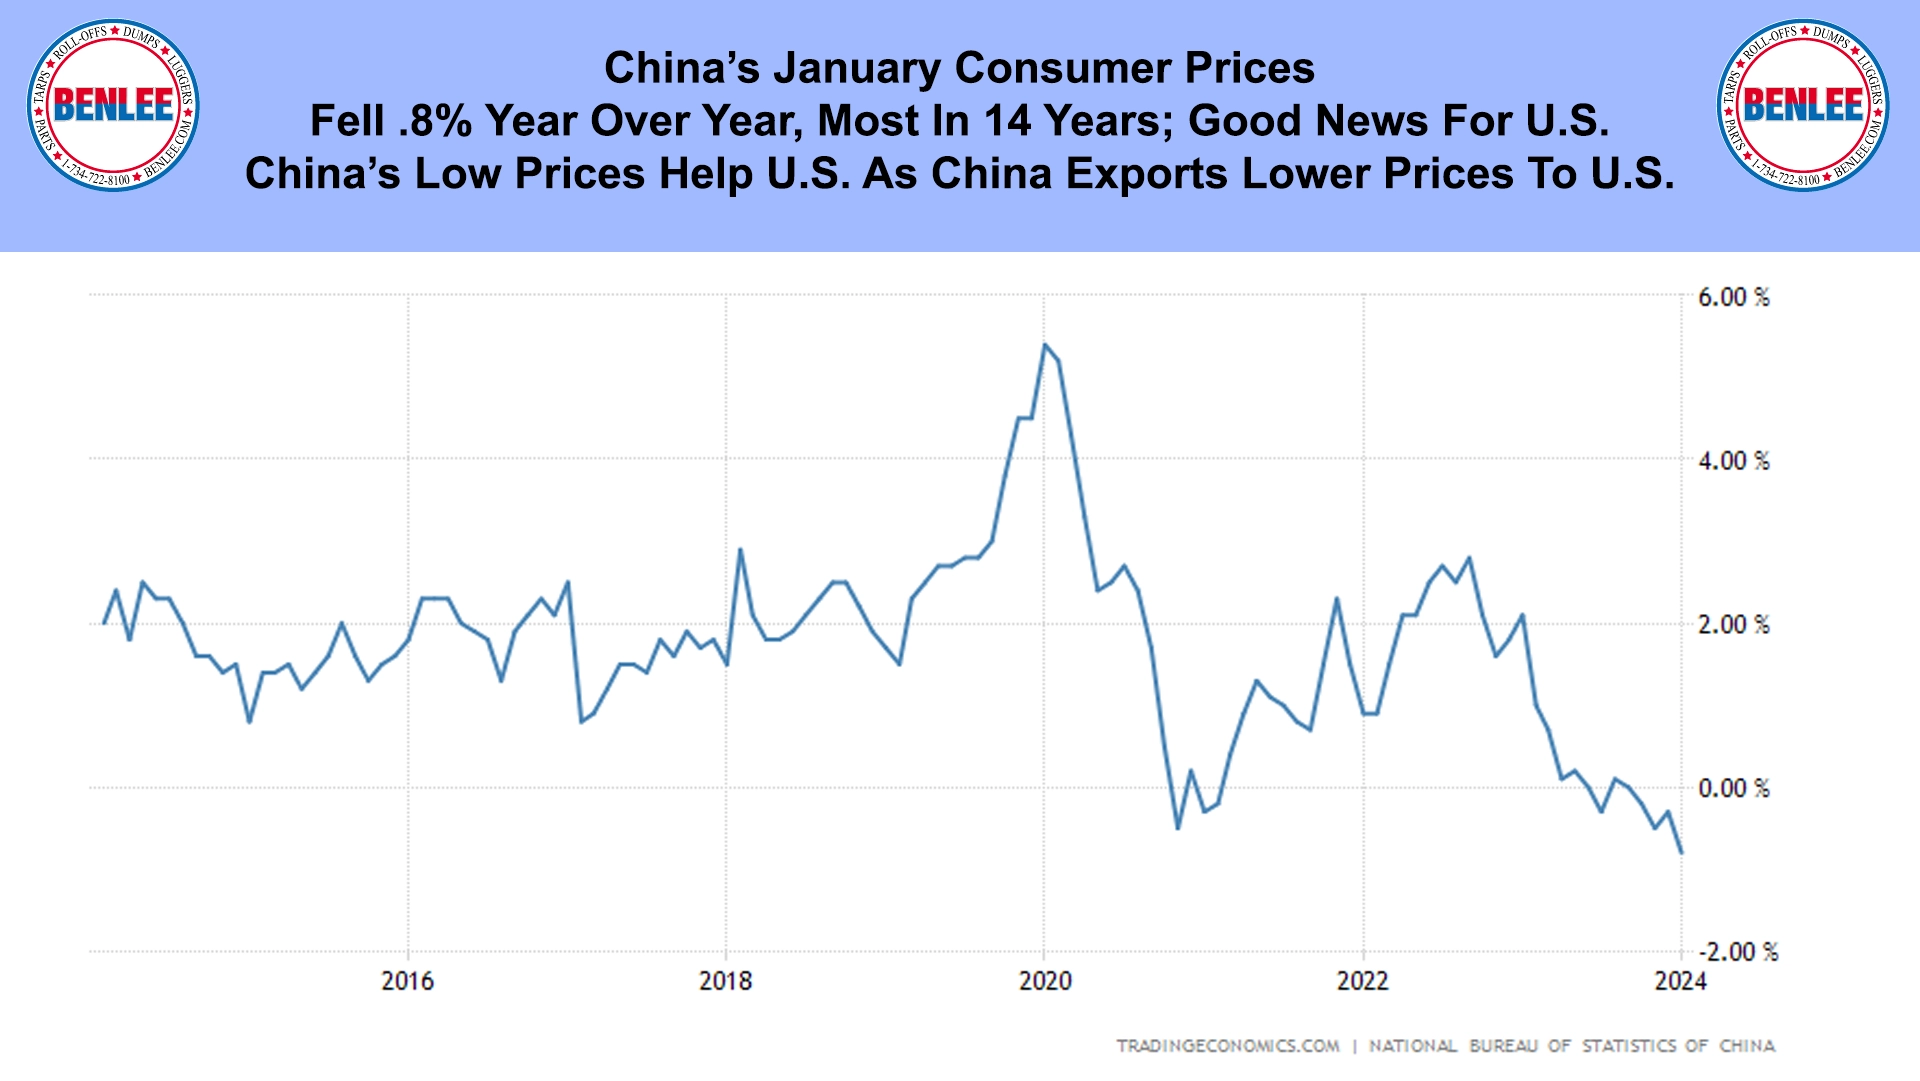 China’s January Consumer Prices